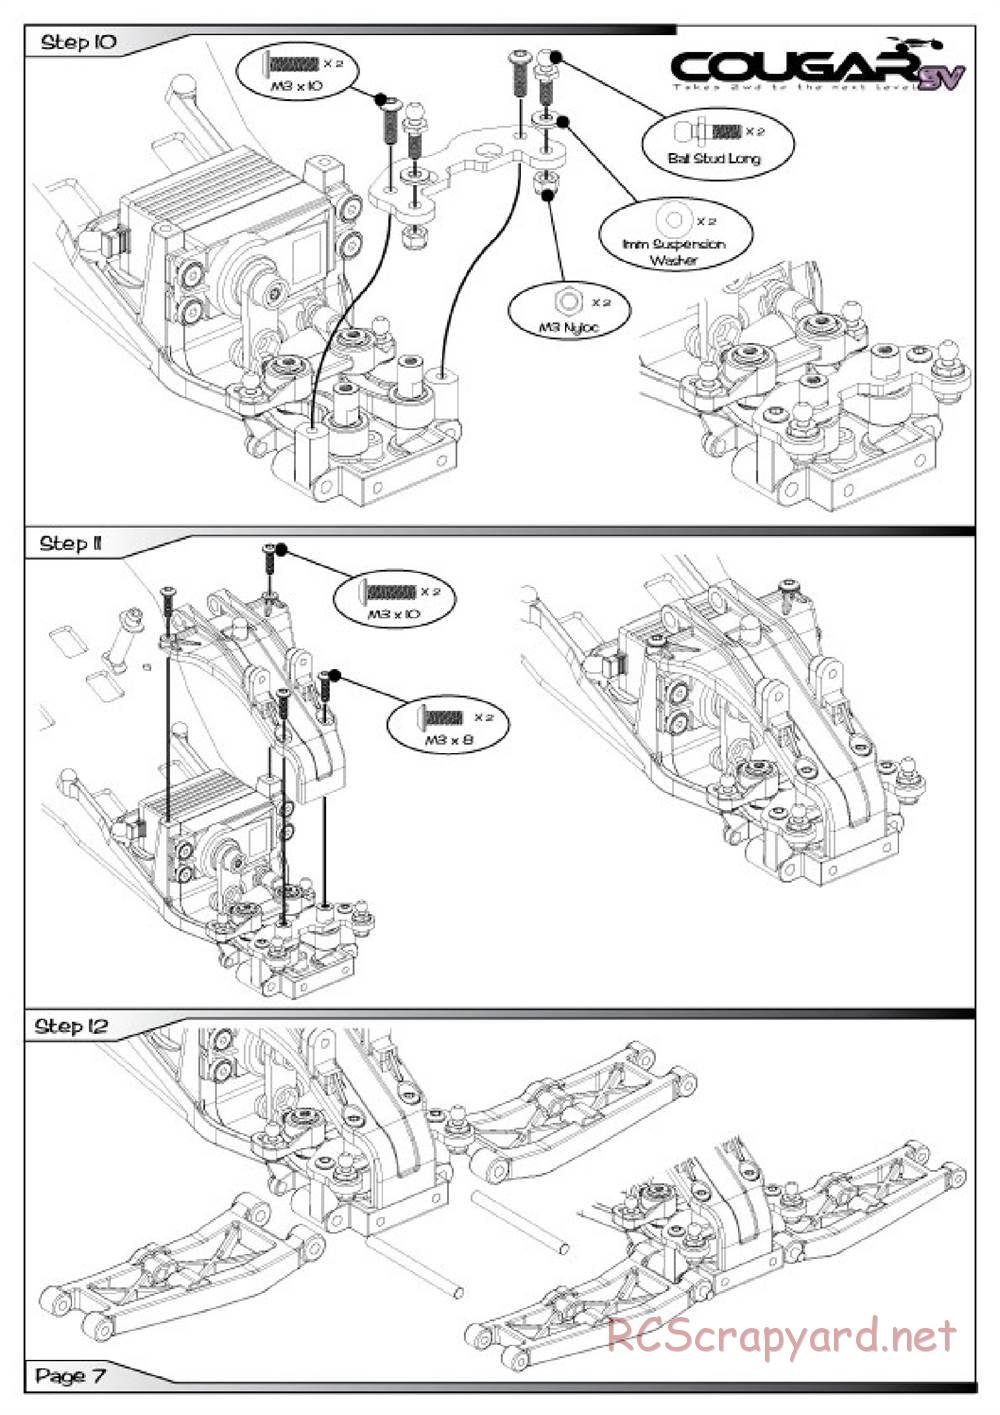 Schumacher - Cougar SV - Manual - Page 8